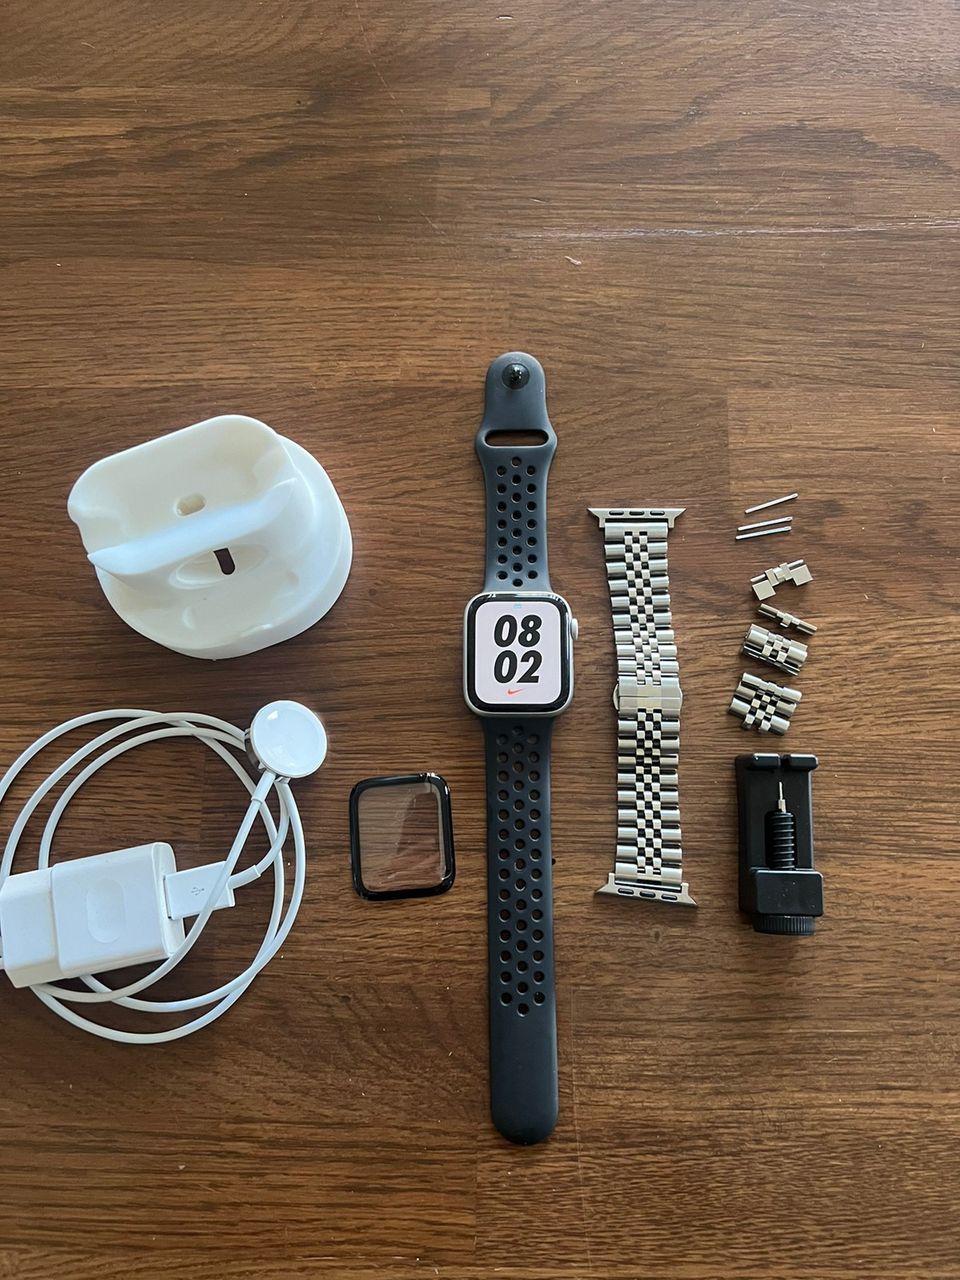 Apple Watch Nike (GPS + Cellular)